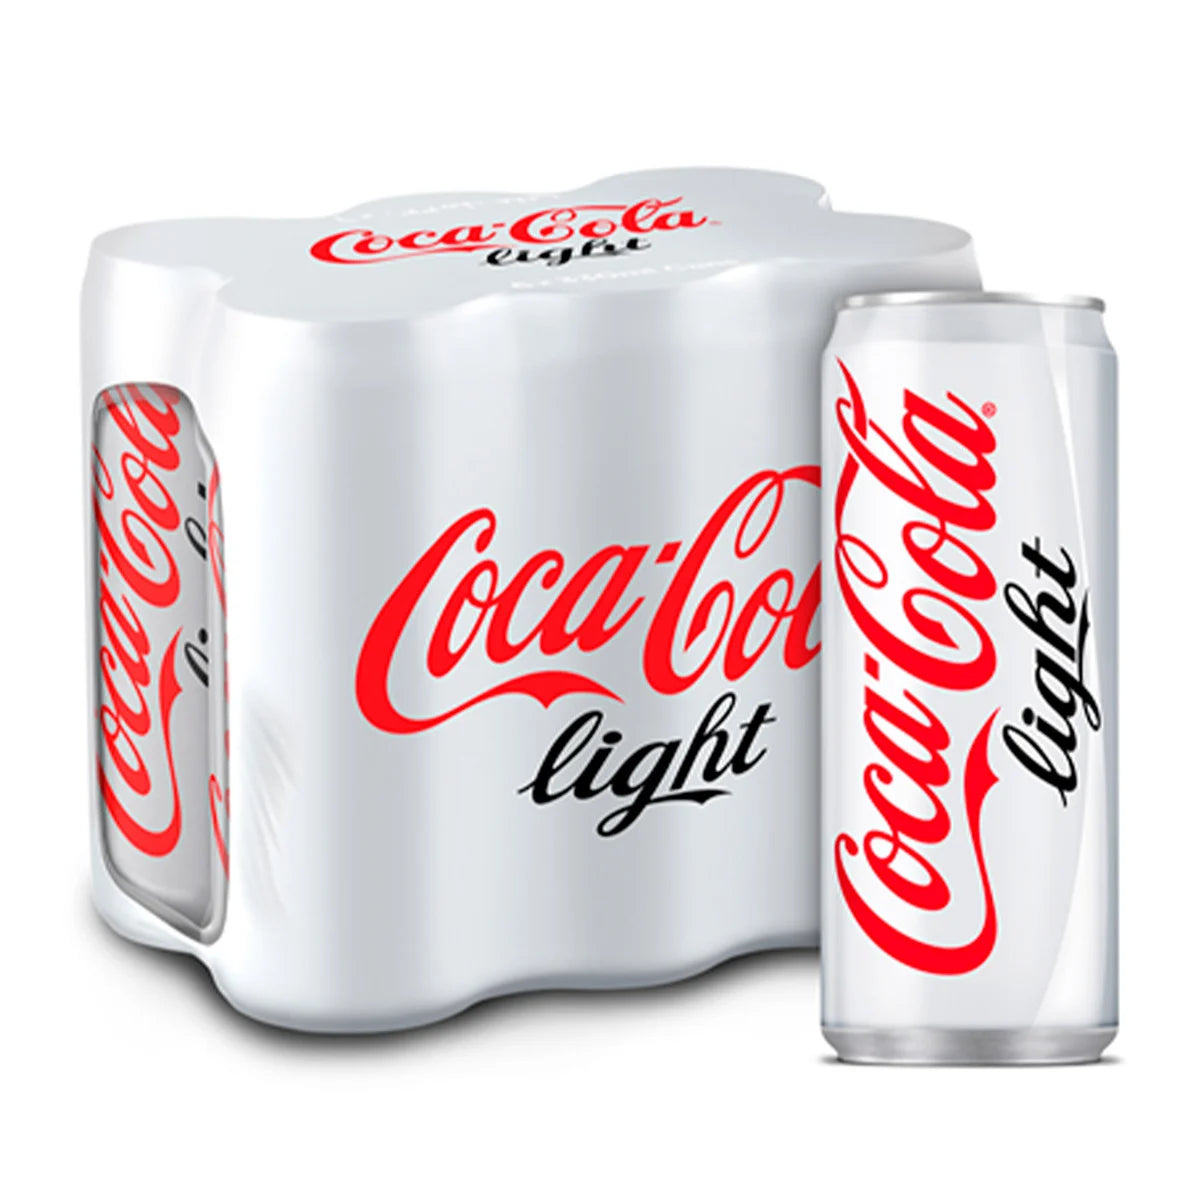 Coca- Cola - Light 330ml